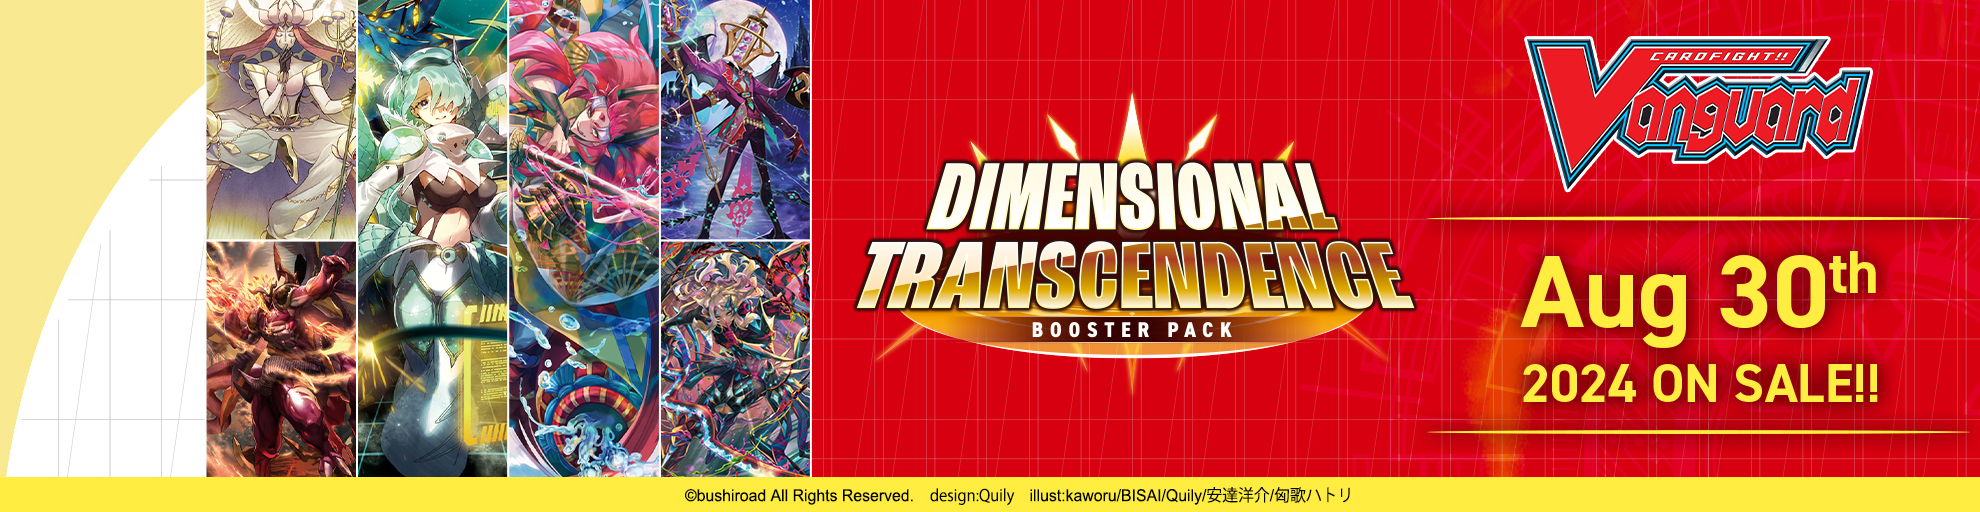 Cardfight!! Vanguard Booster Pack 03: Dimensional Transcendence